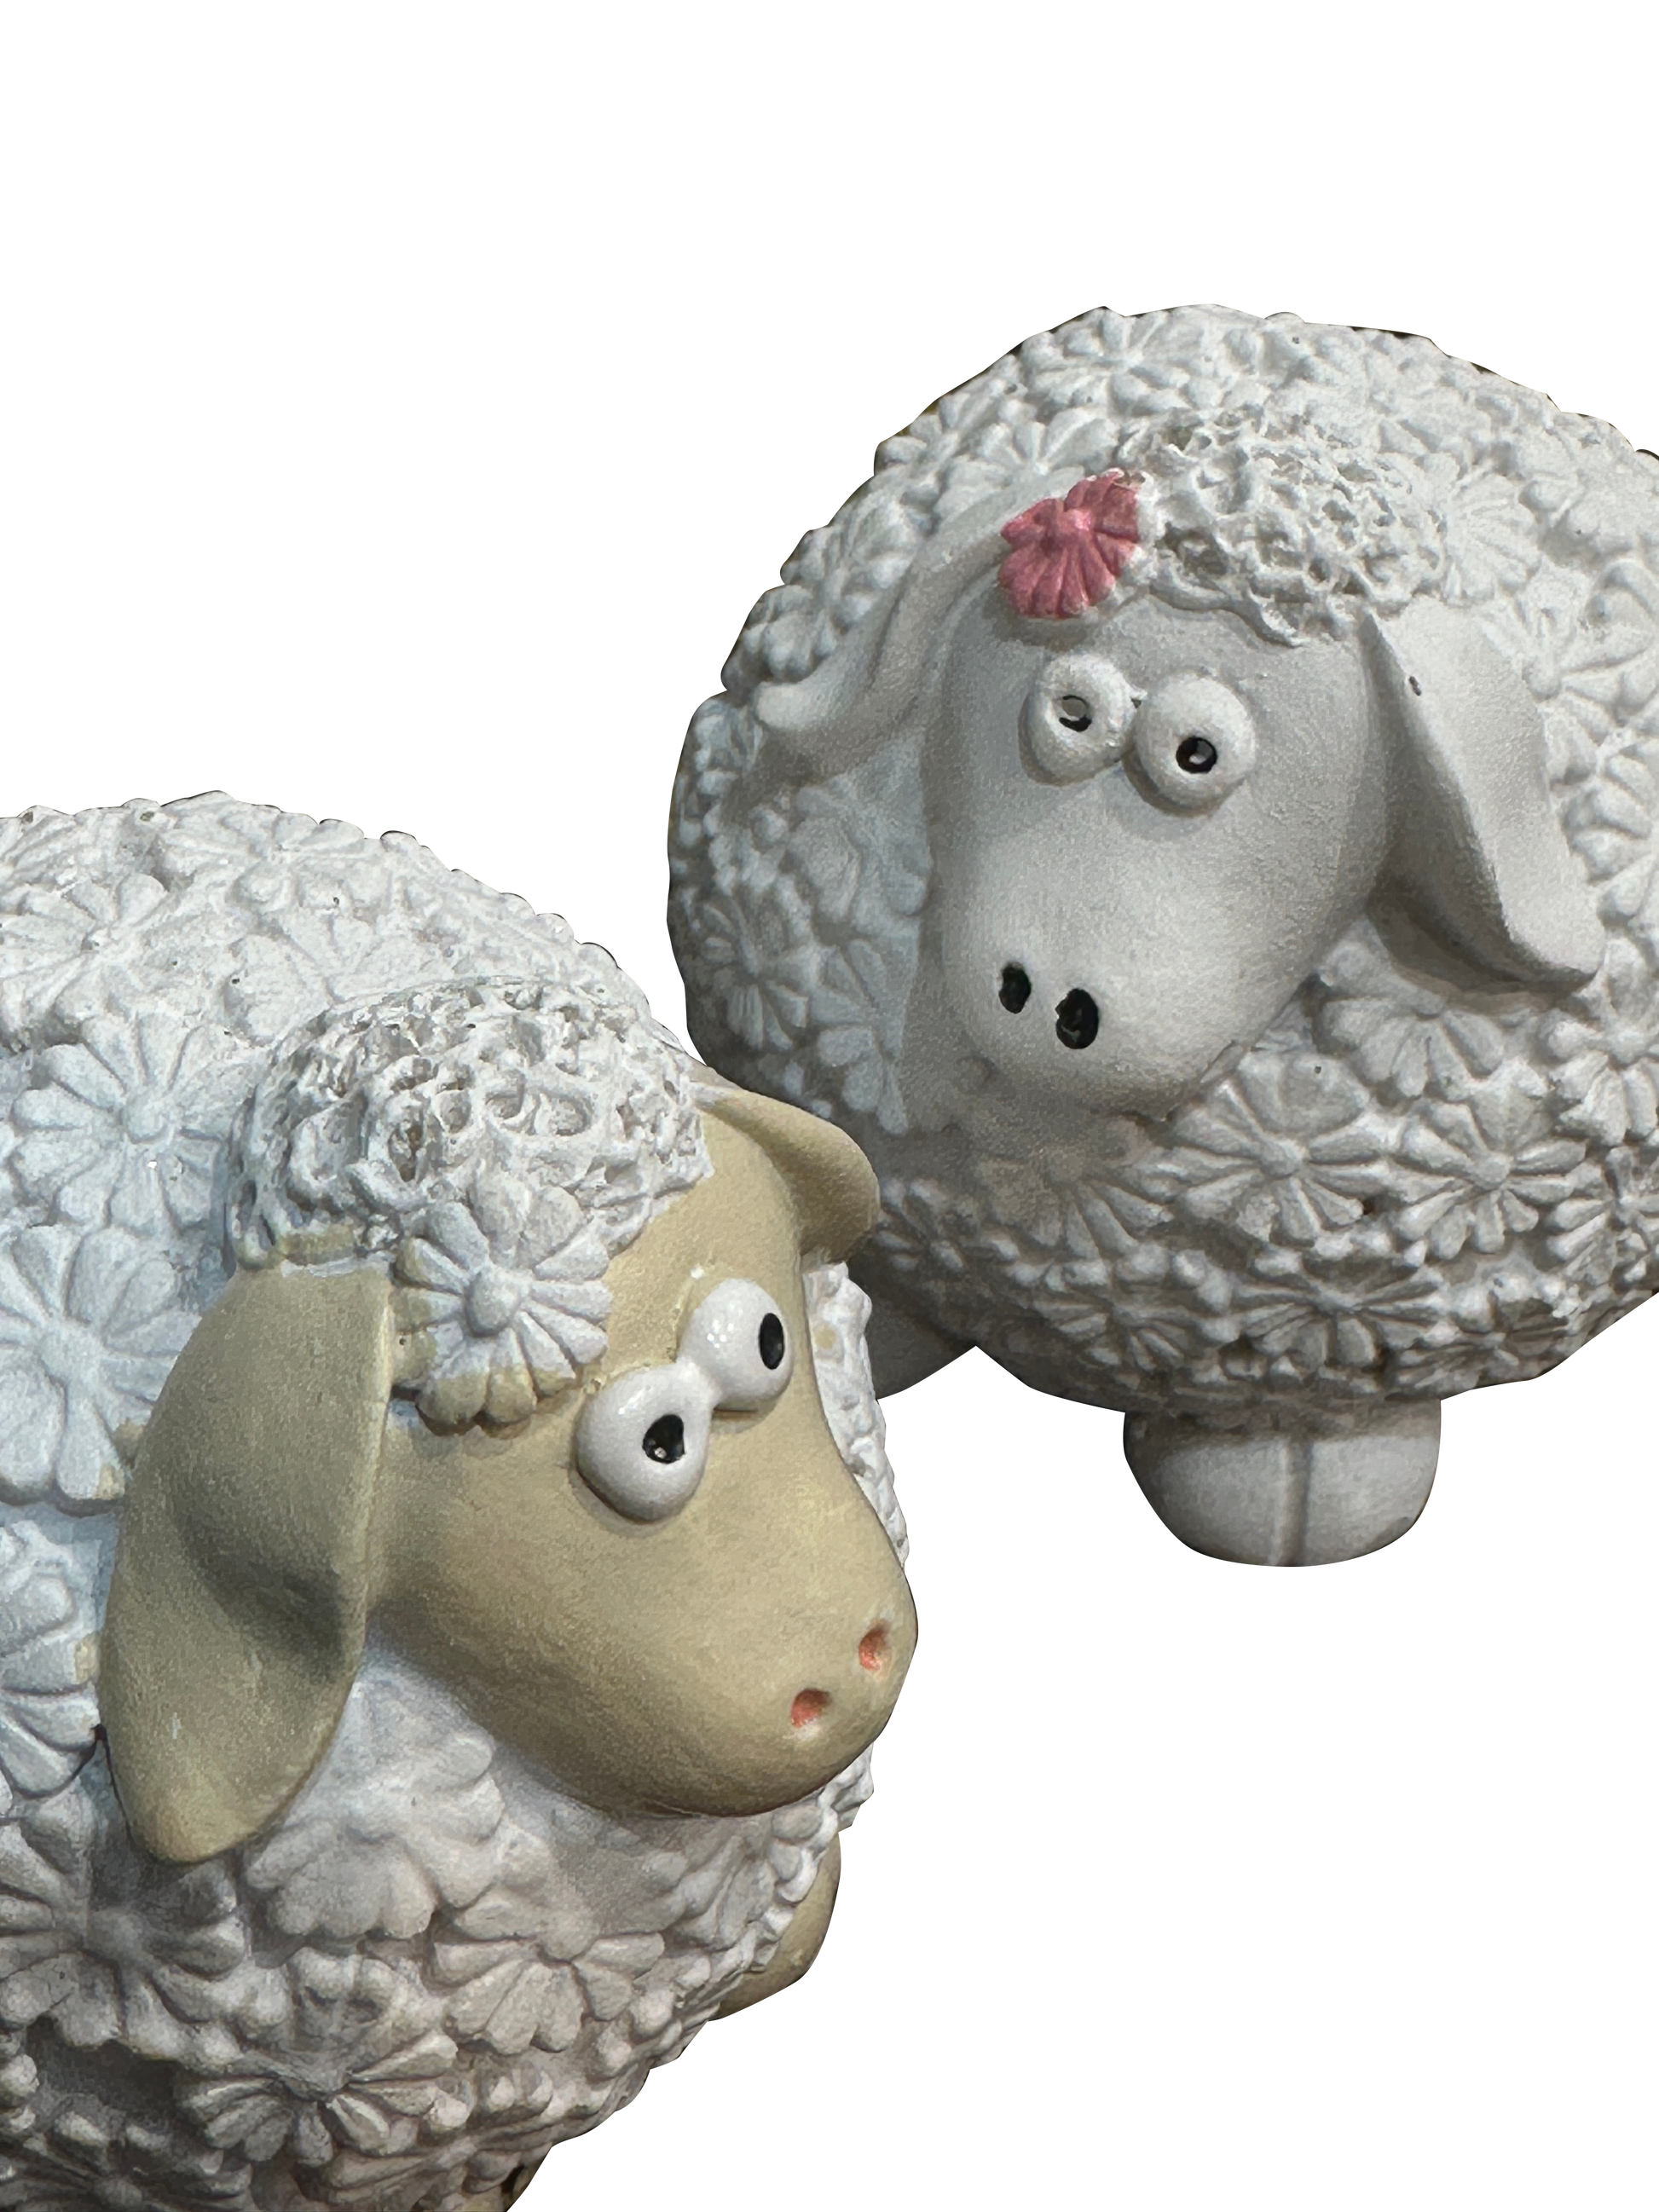 Cartoonic Sheep Shaped Showpiece (Set of 2) - Sunset Gifts Store